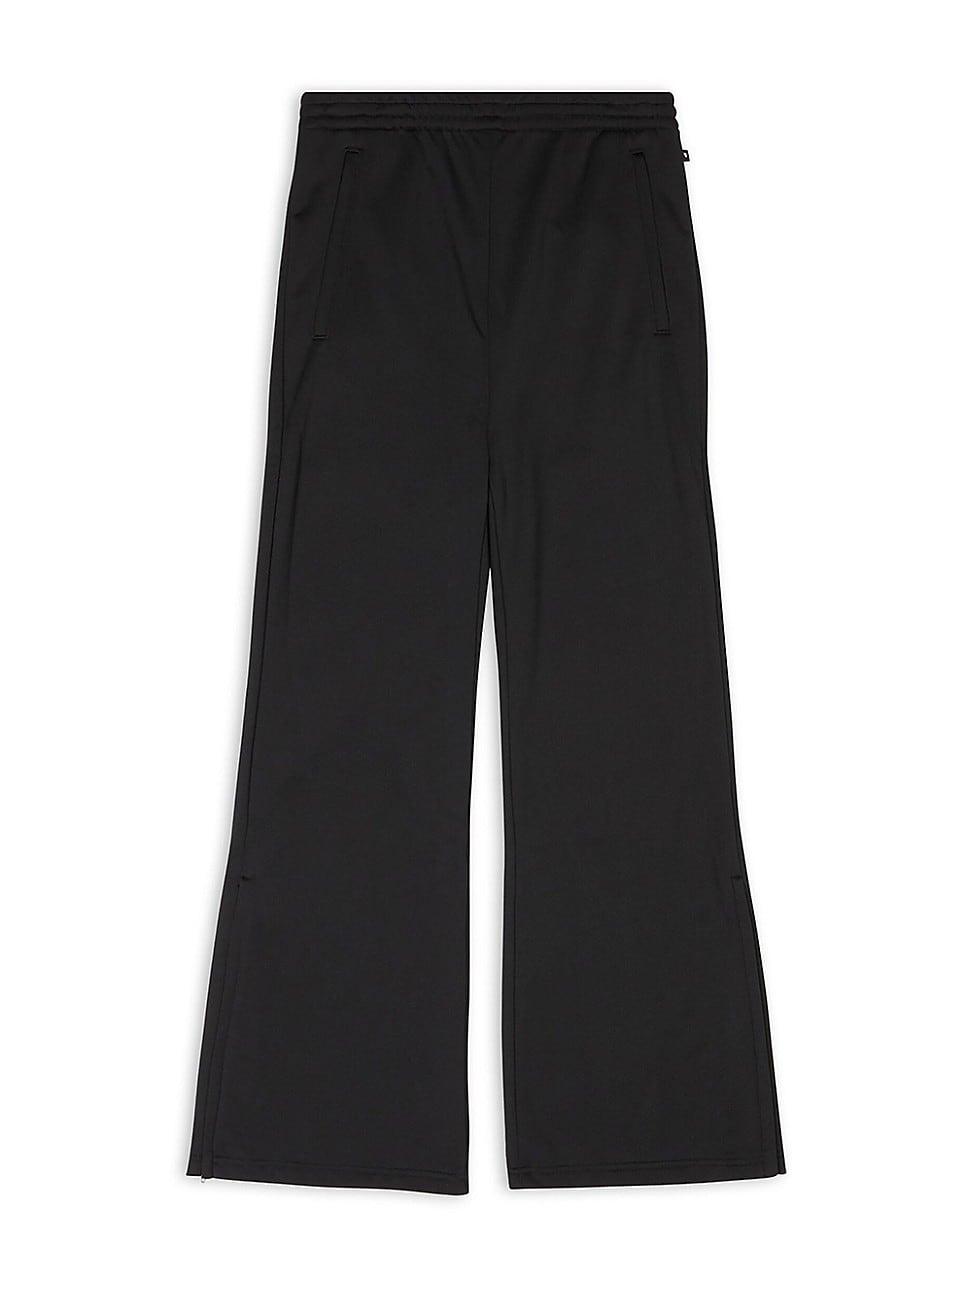 Balenciaga Long Tracksuit Pants in Black | Lyst